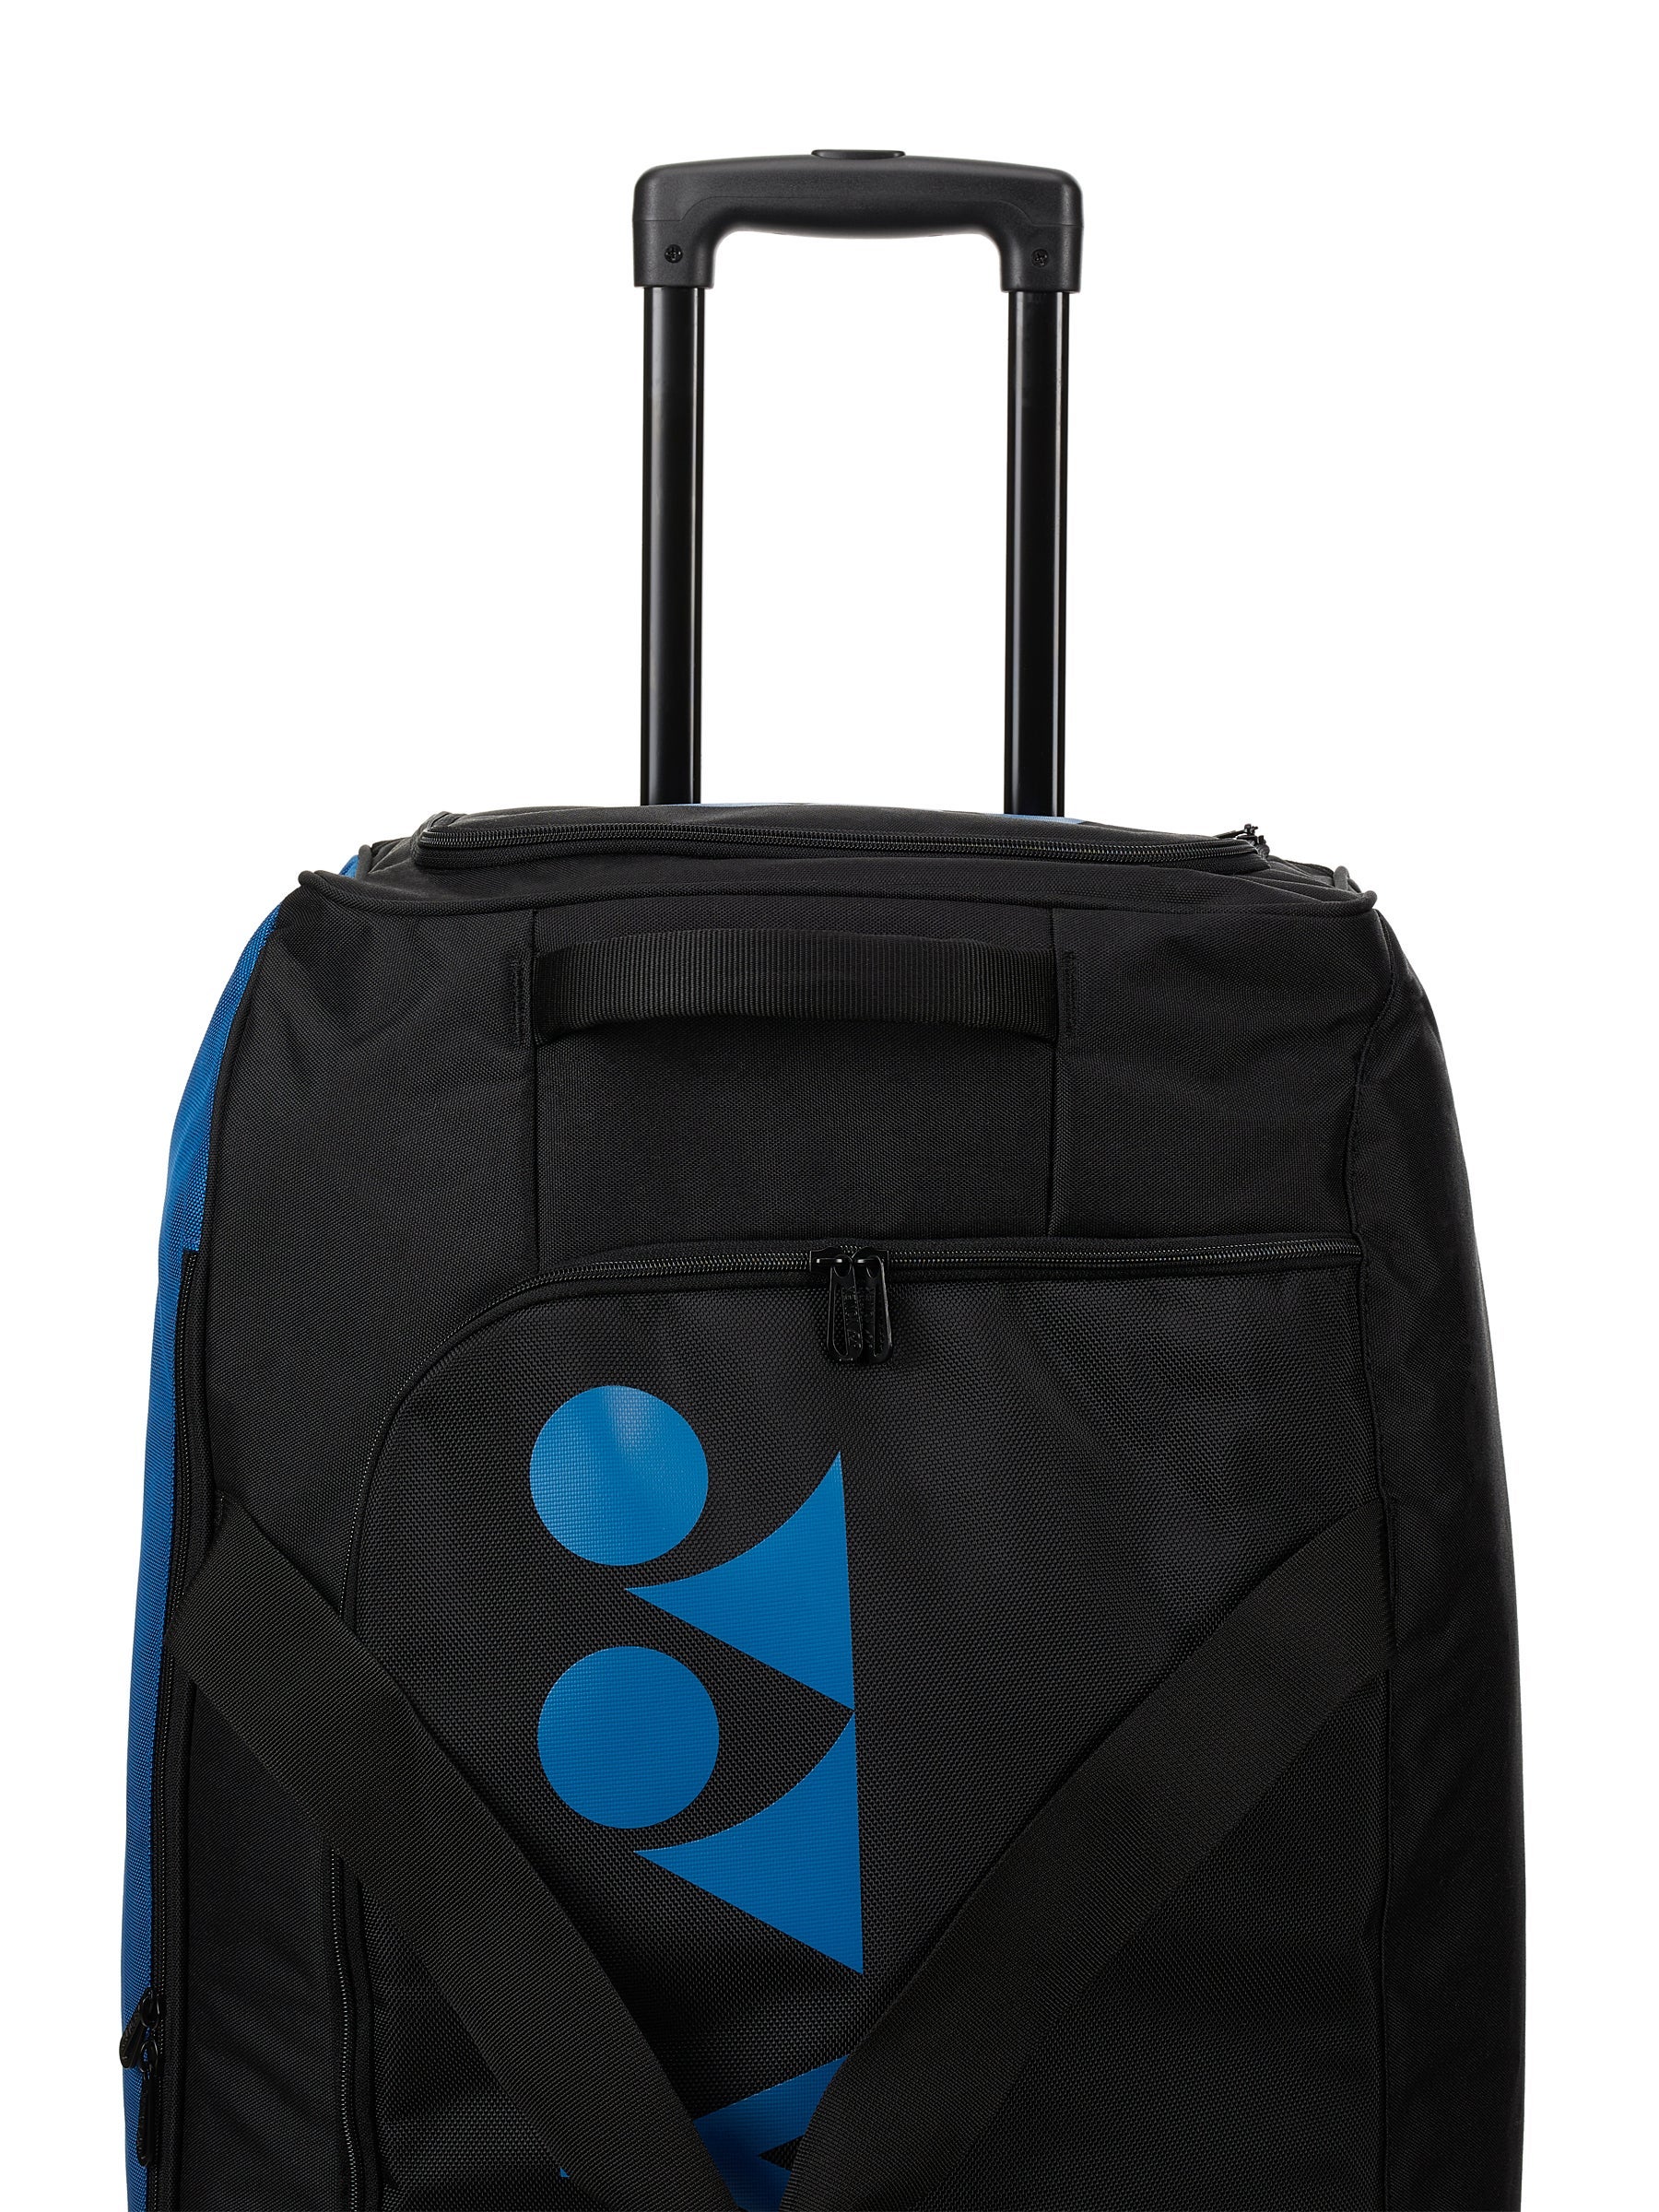 BAG9832EX Yonex 9832EX Pro Trolley Bag Black/Blue 